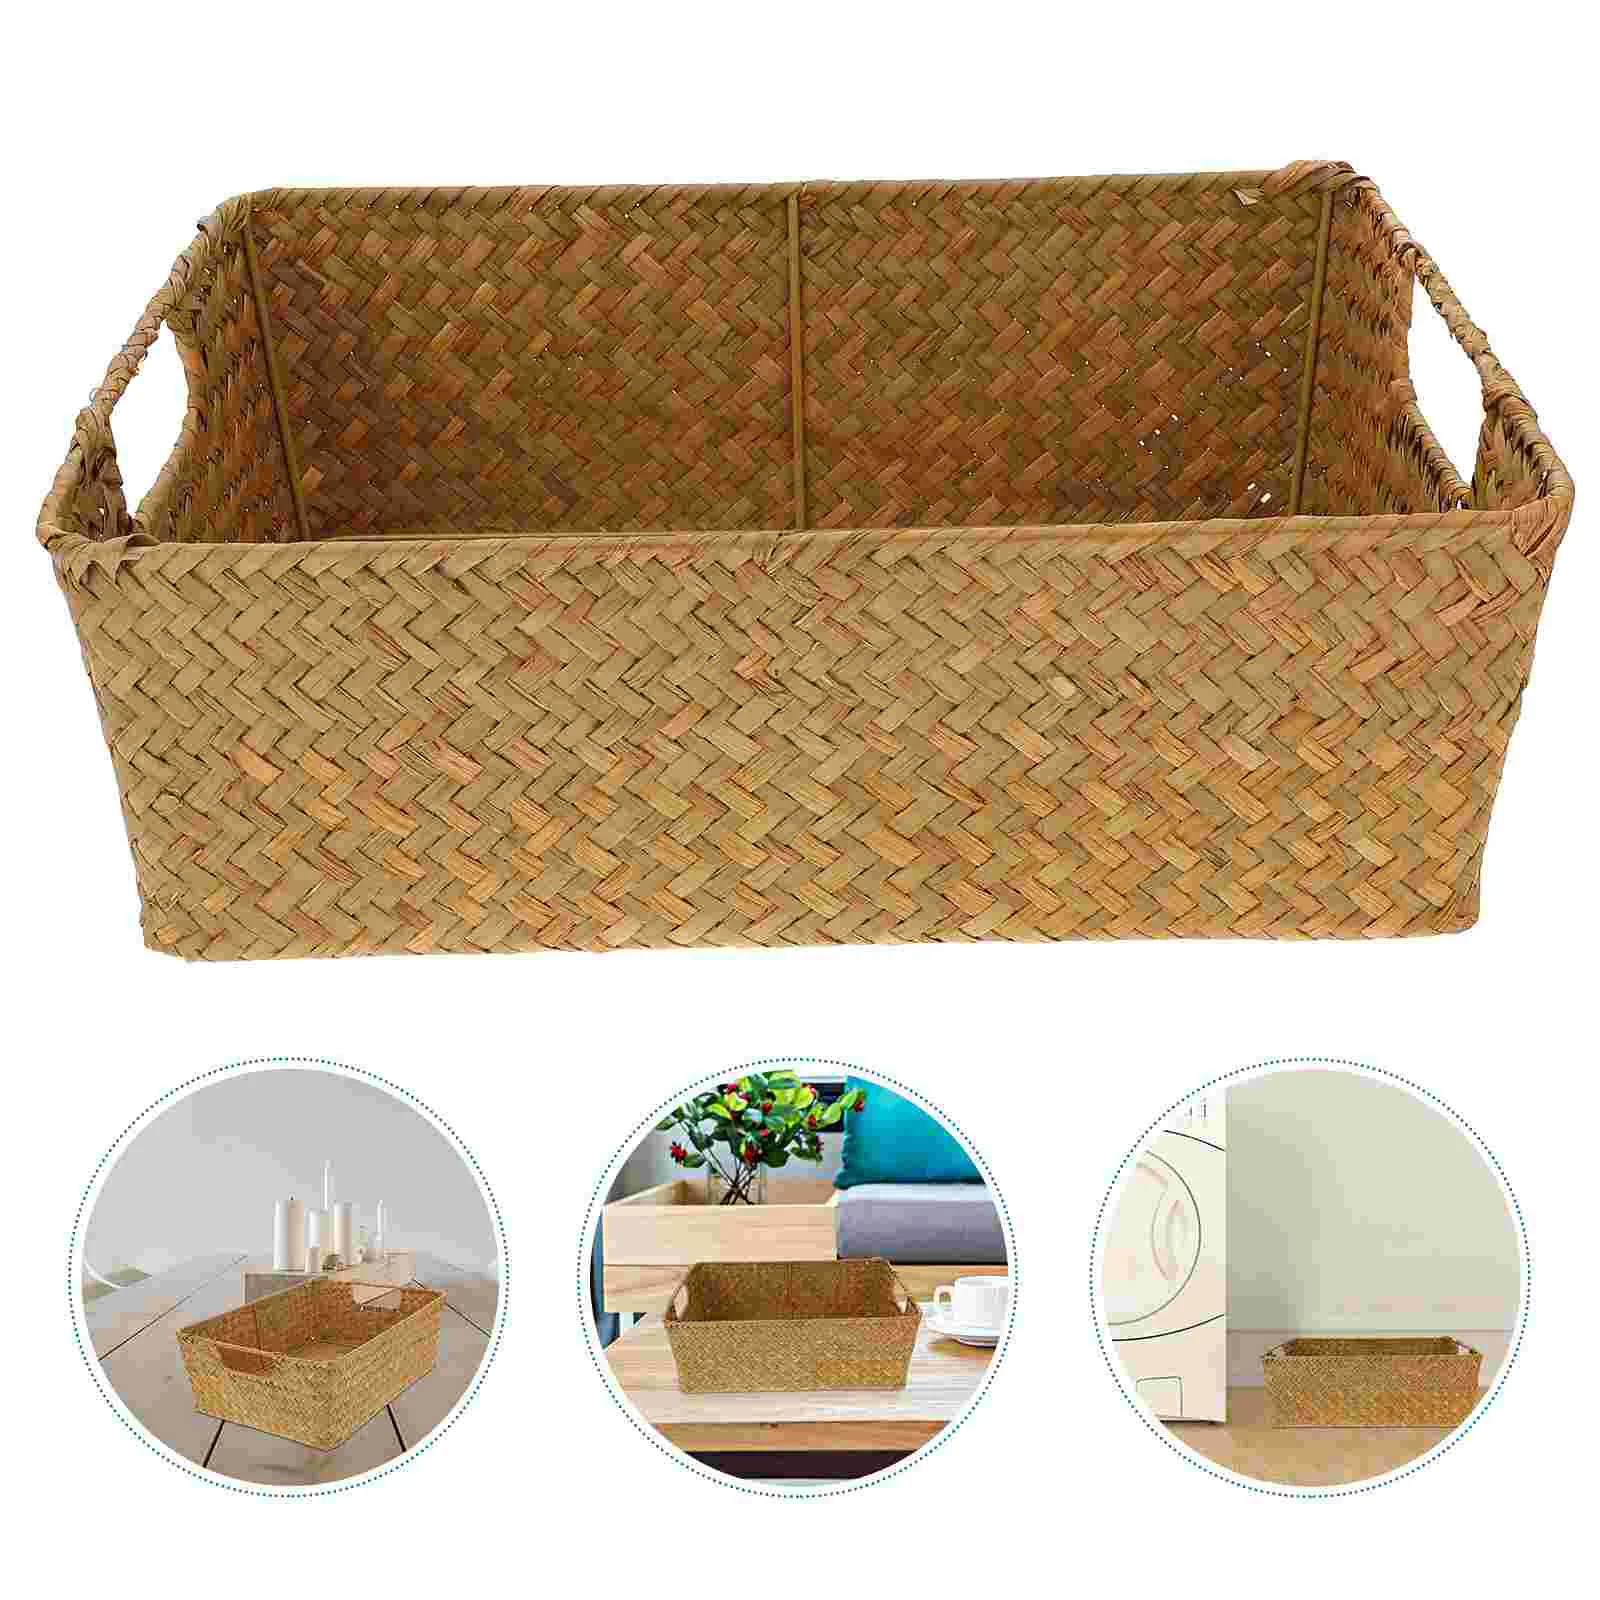 

Basket Storage Baskets Wicker Woven Seagrass Rattan Organizer Fruit Bins Bin Hamper Seaweed Large Rectangular Serving Box